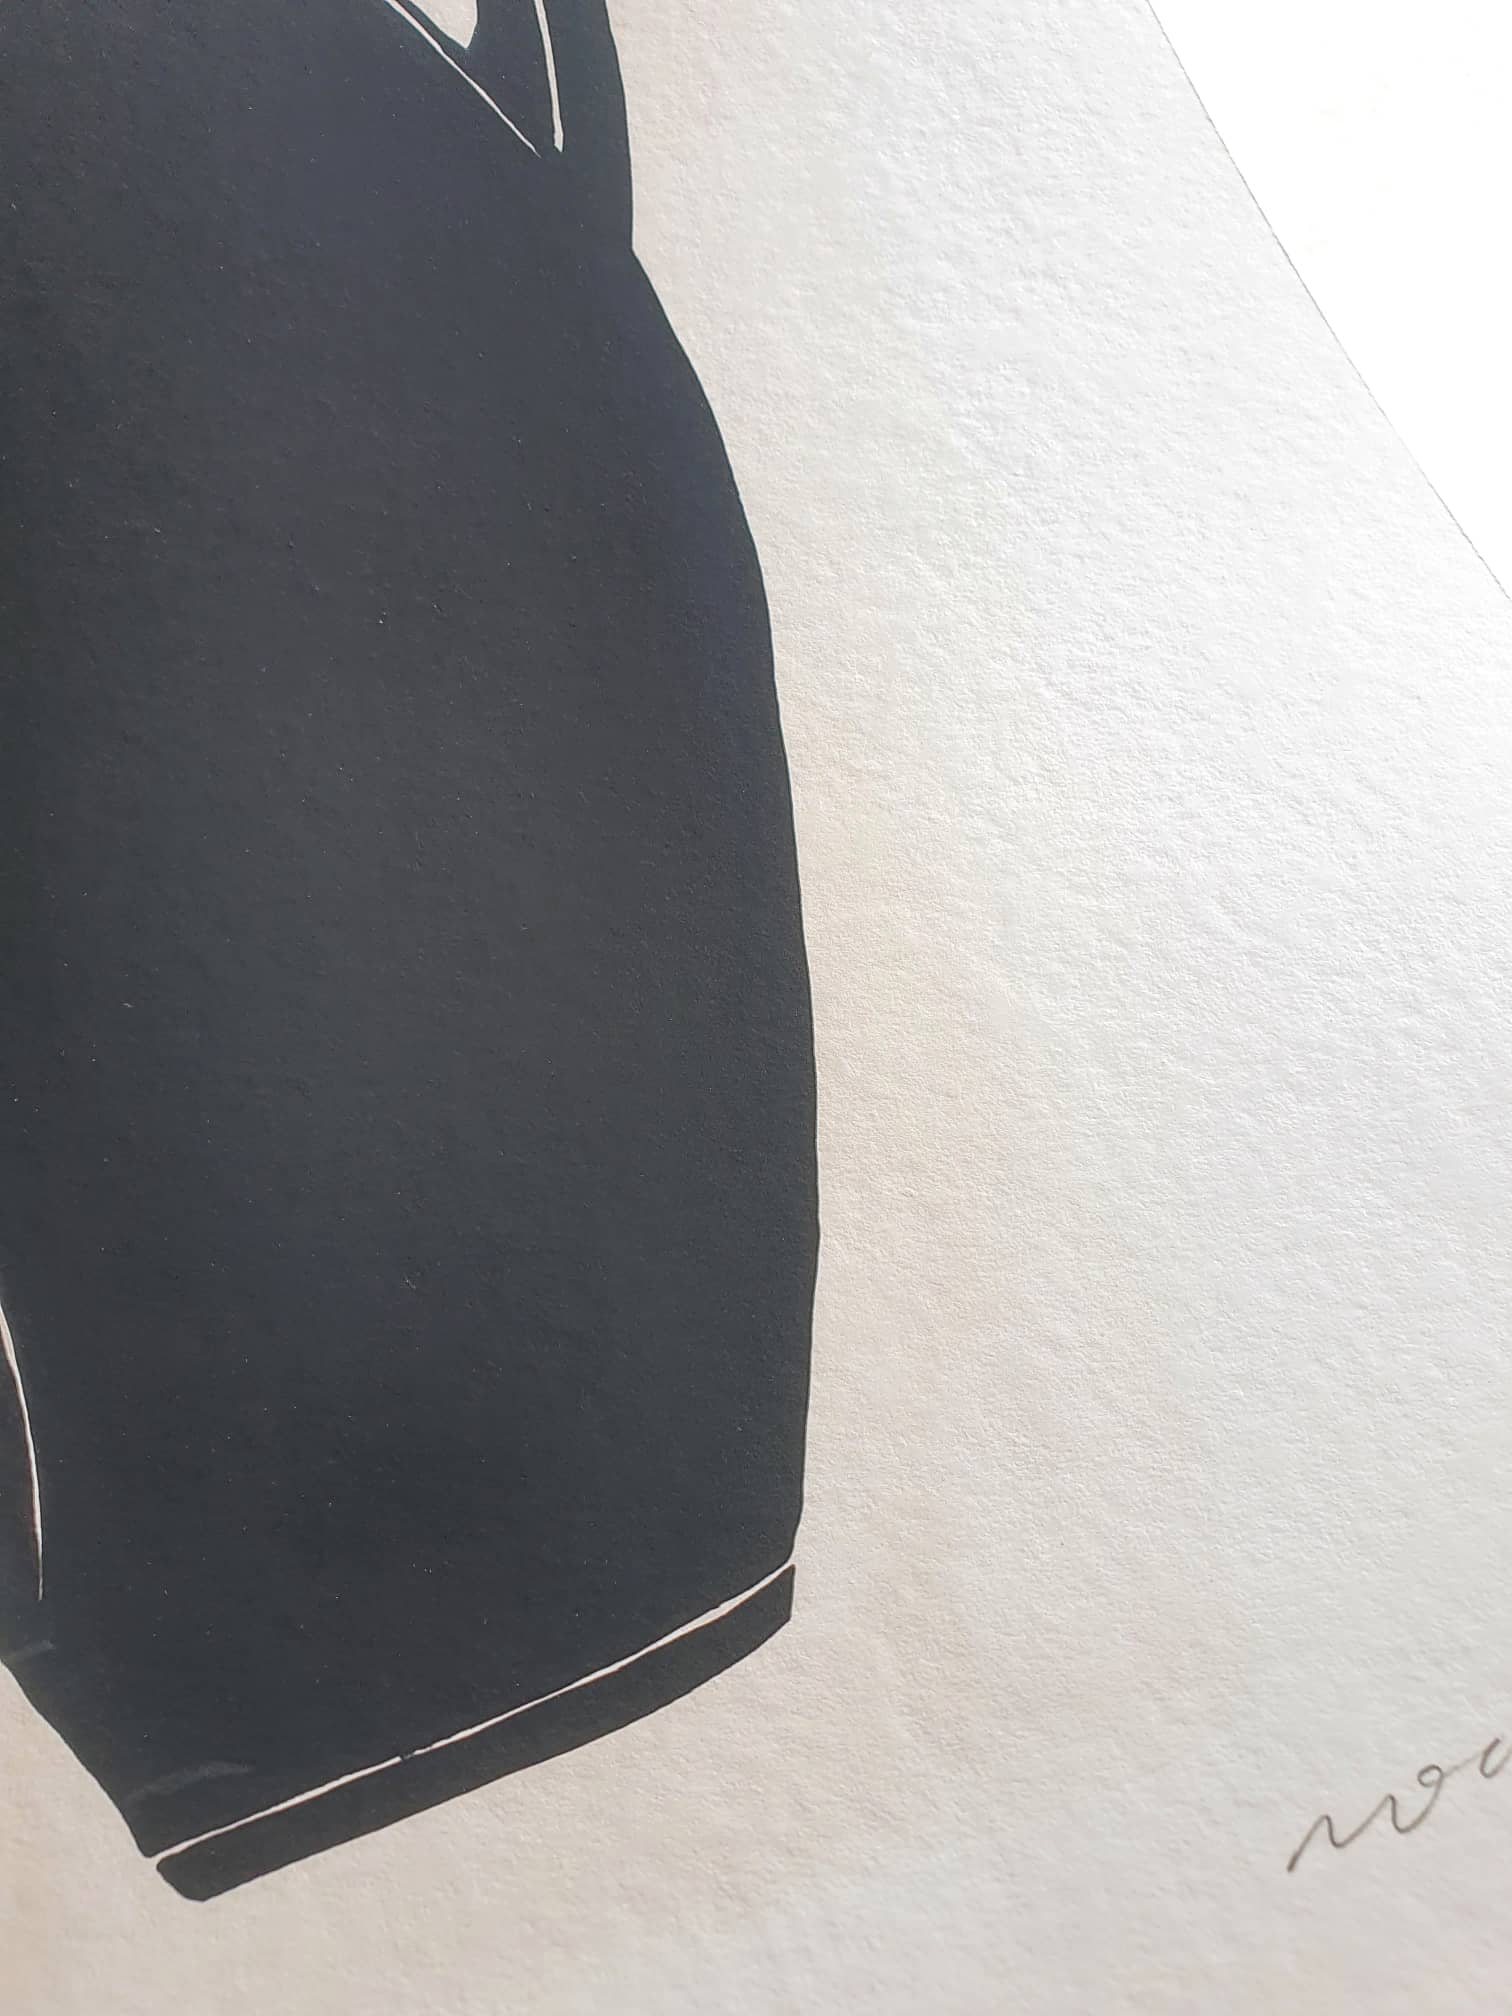 Noama modern abstract scandi black jug giclee art print